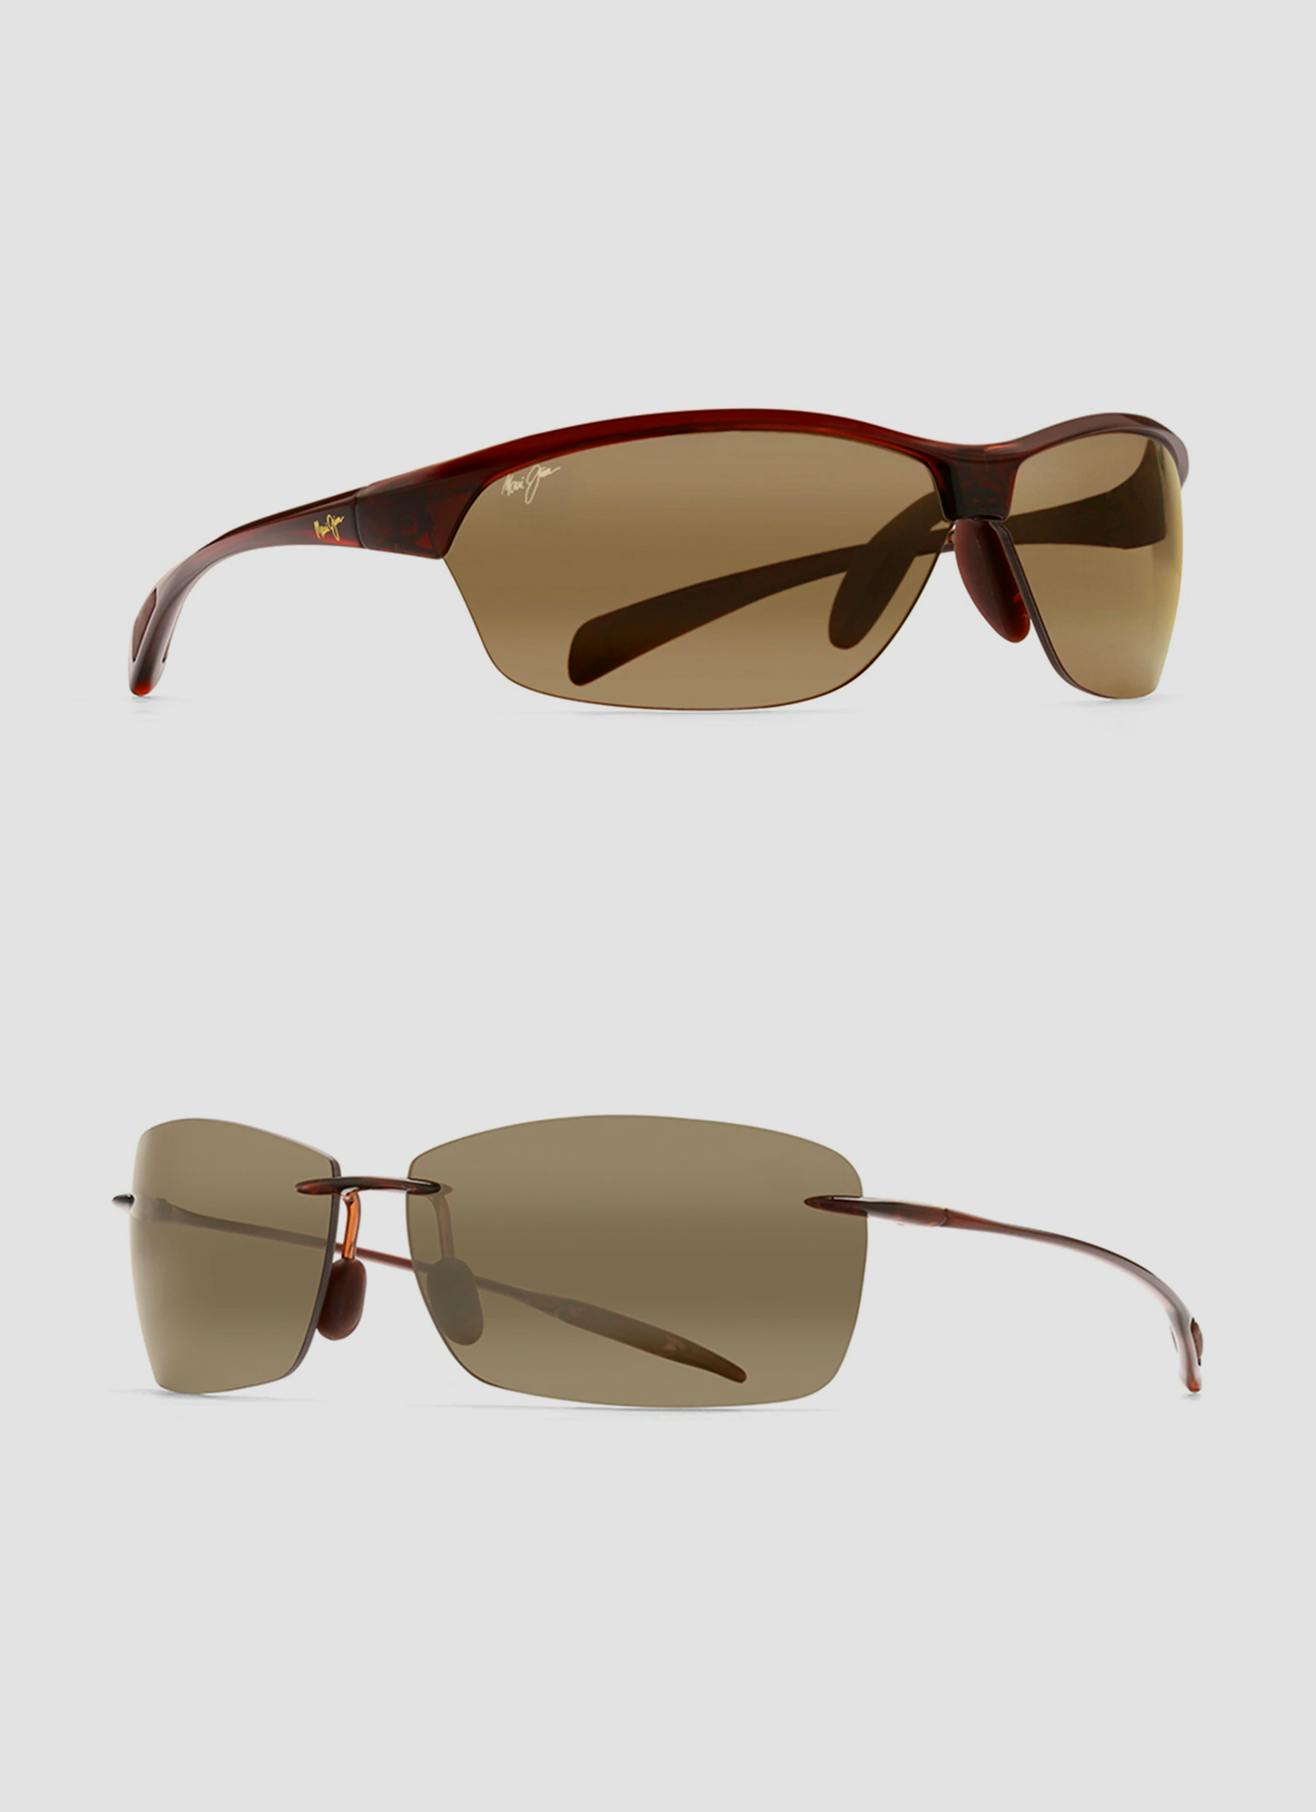 2 lunettes de soleil sport Maui Jim nylon marron nylor galbée verres brun polarisant et percée nylon brun polarisant effet miroir bi dégradé